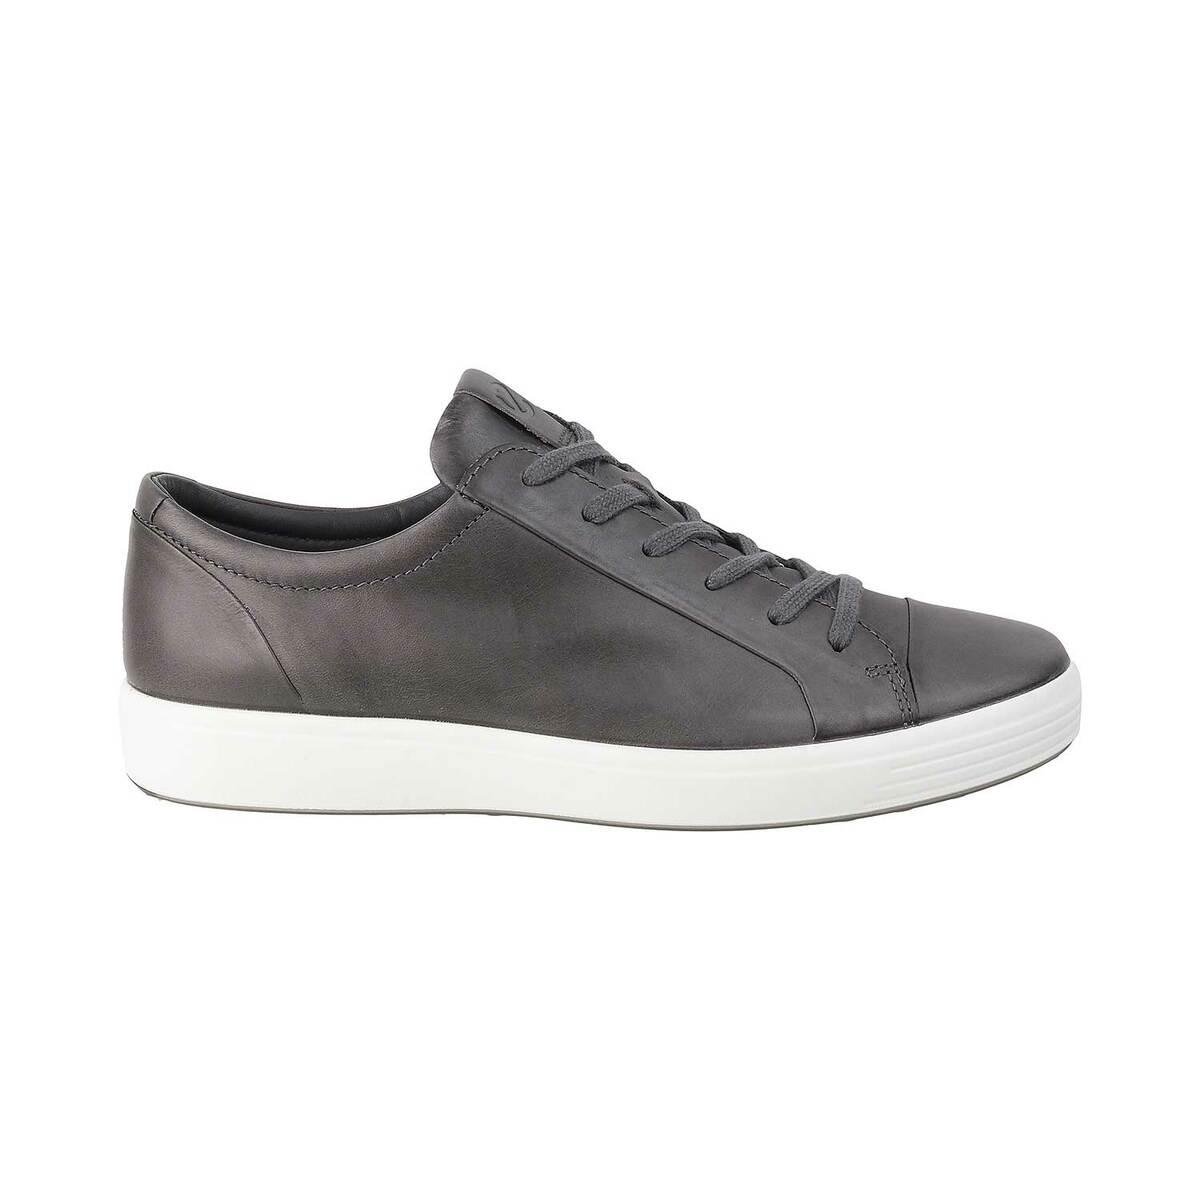 Buy Grey Casual Online | SKU: 339-470364-14-42-Metro Shoes